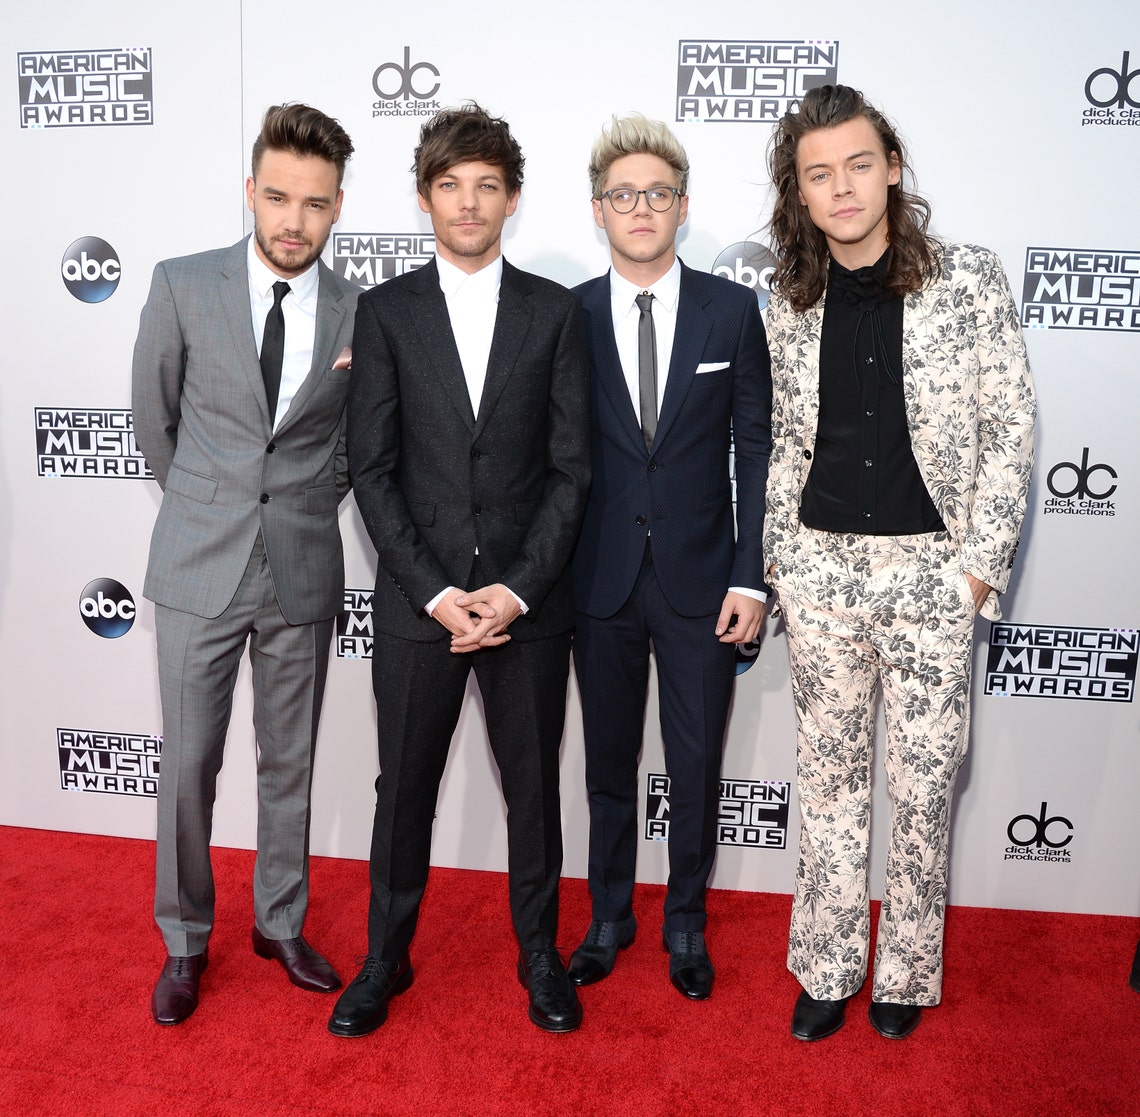 American Music Awards Red Carpet 2015 